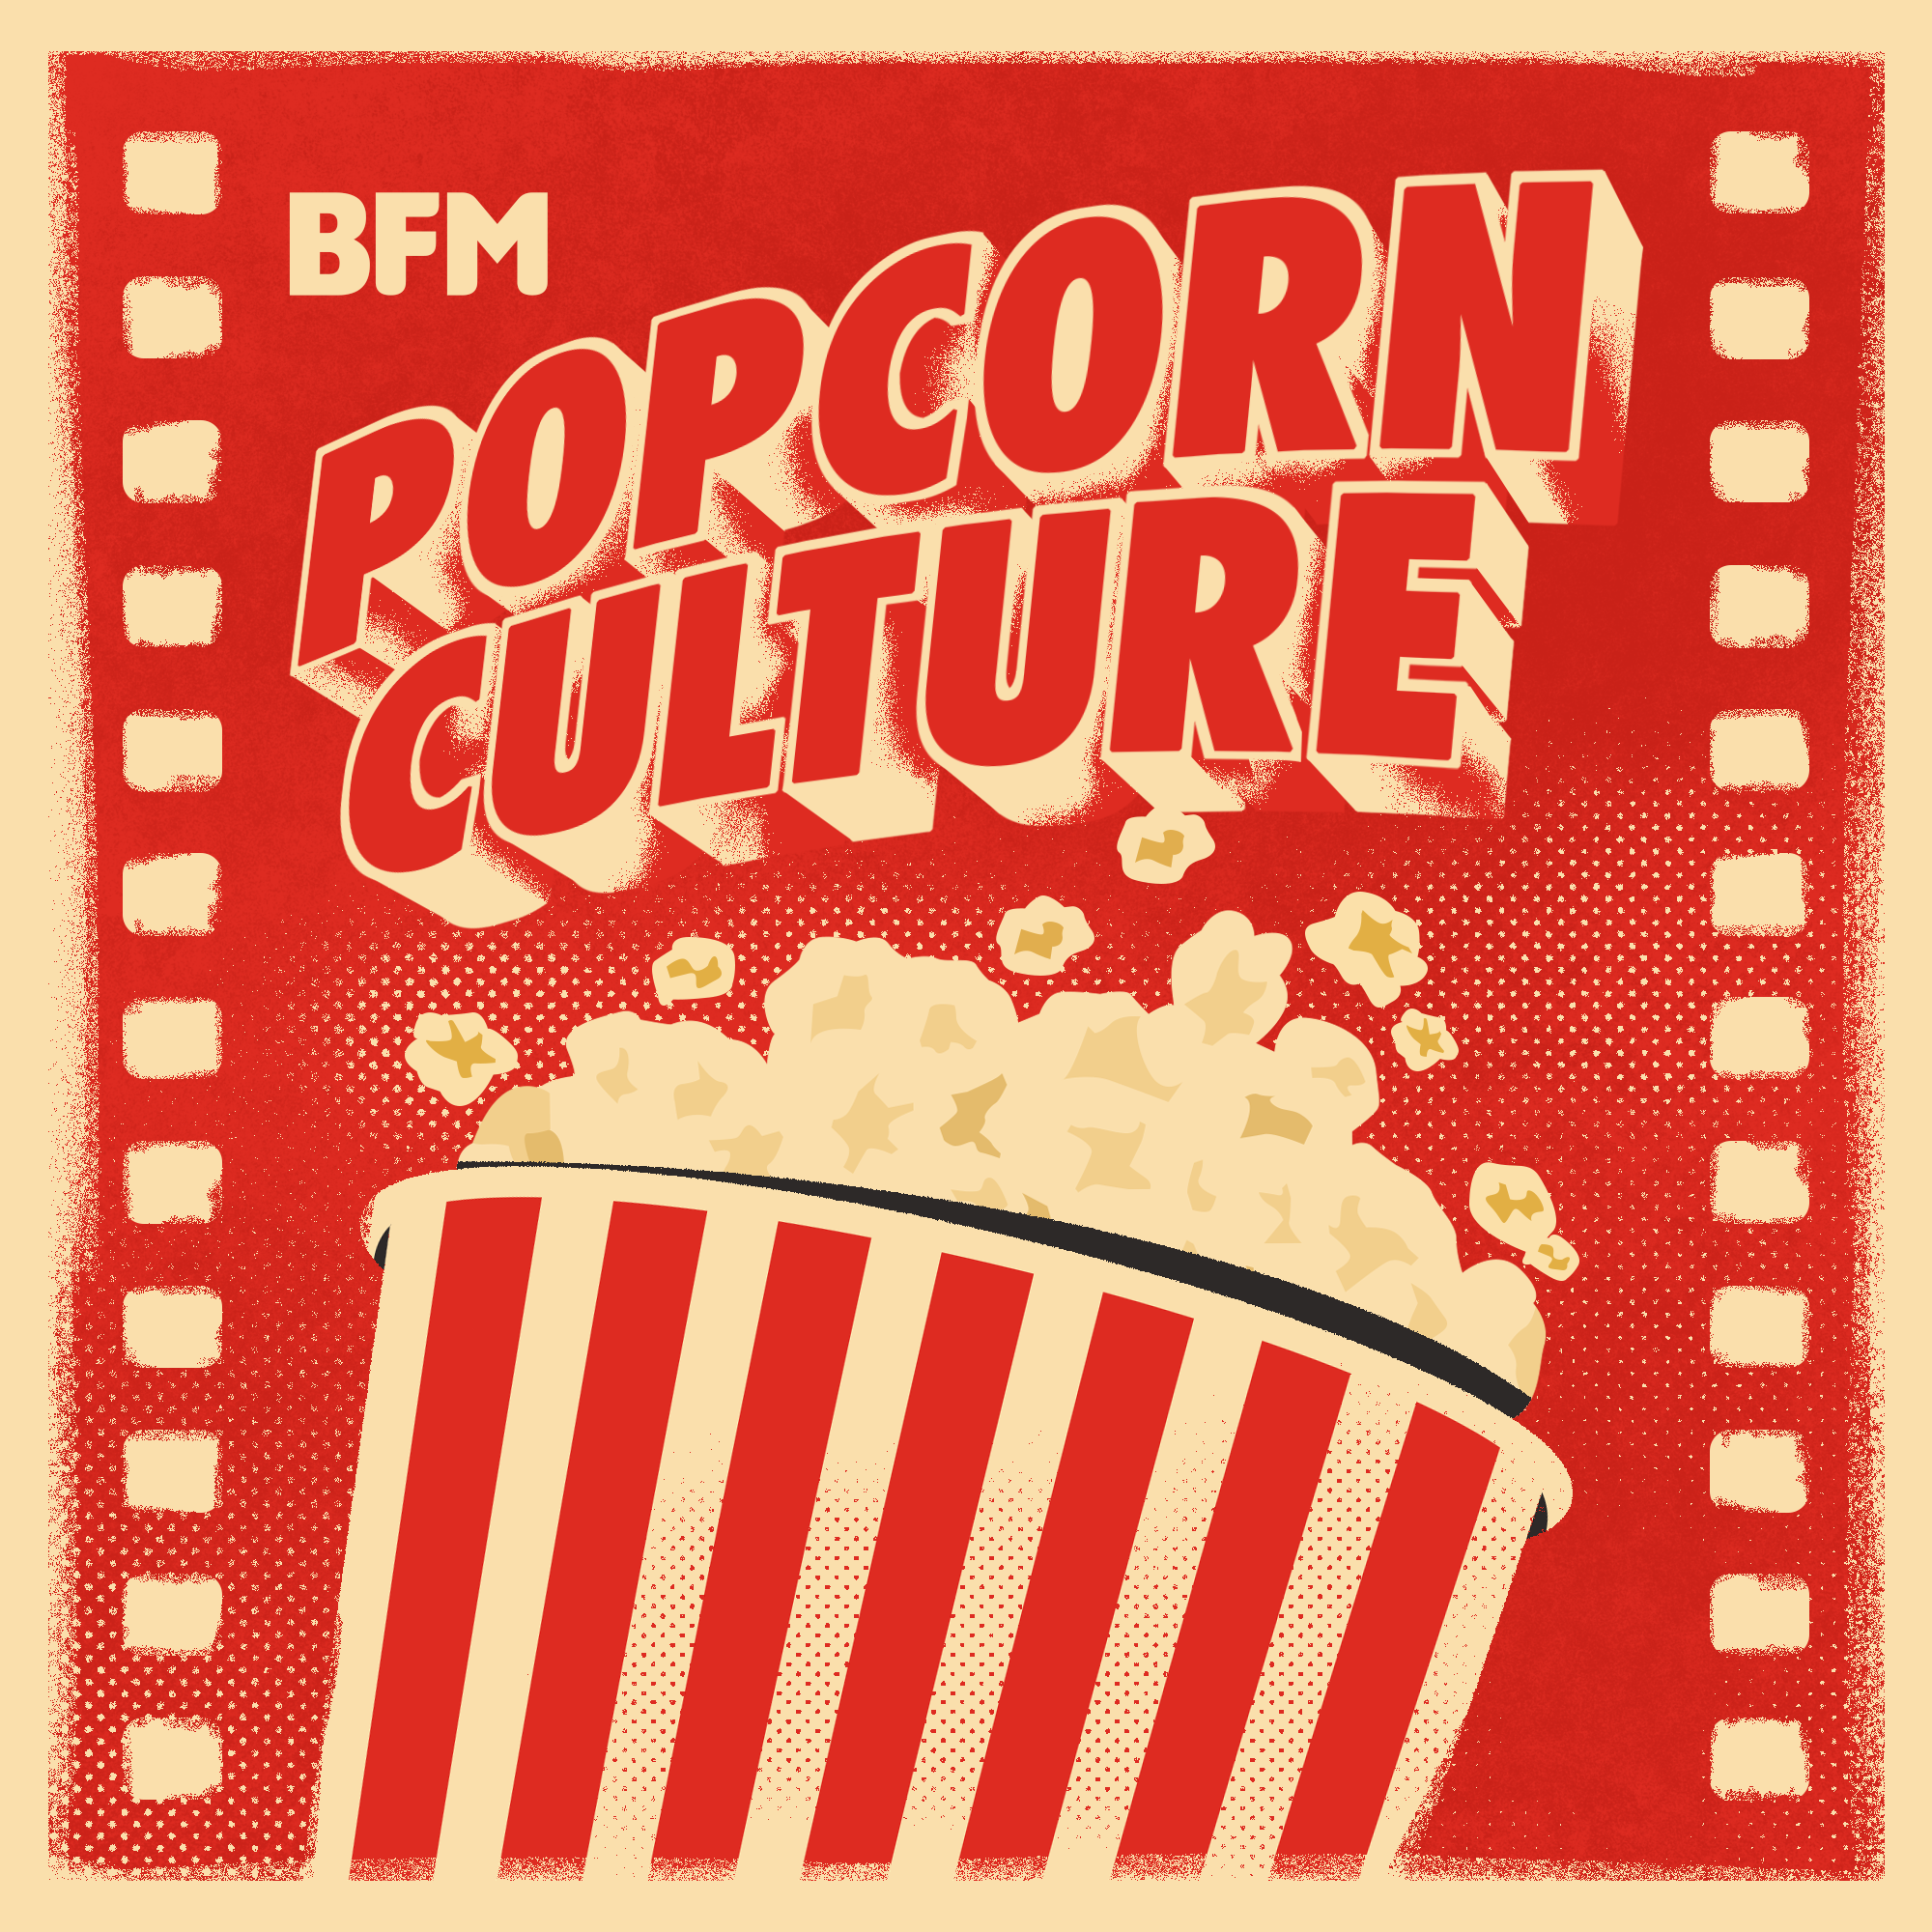 Popcorn Culture - Supercut: The Best Movies of 2023